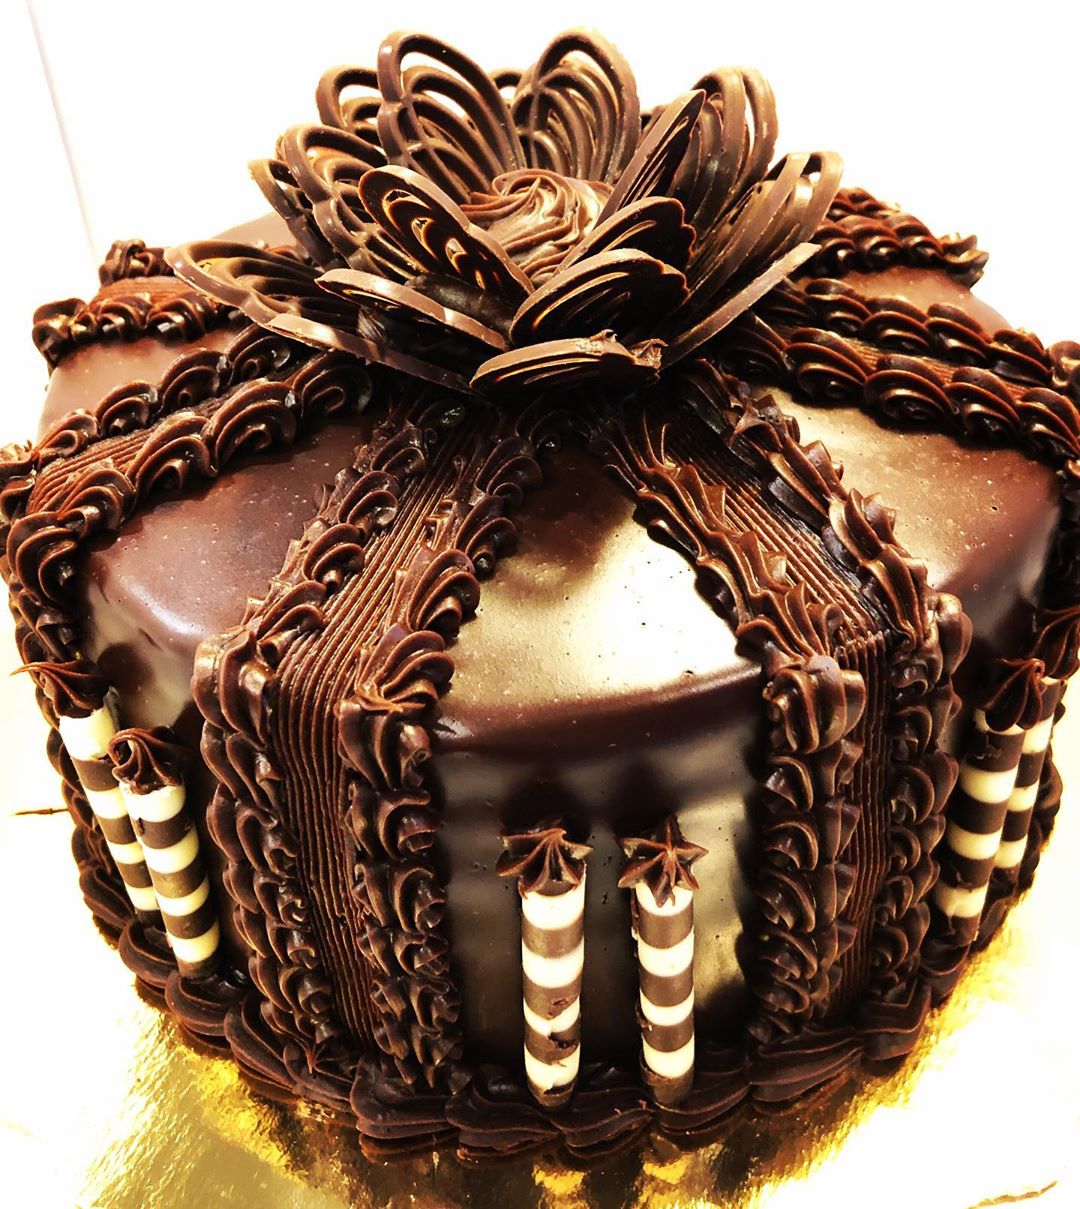 Buy Premium Cakes Online Online Premium Cakes Delivery In India Winni